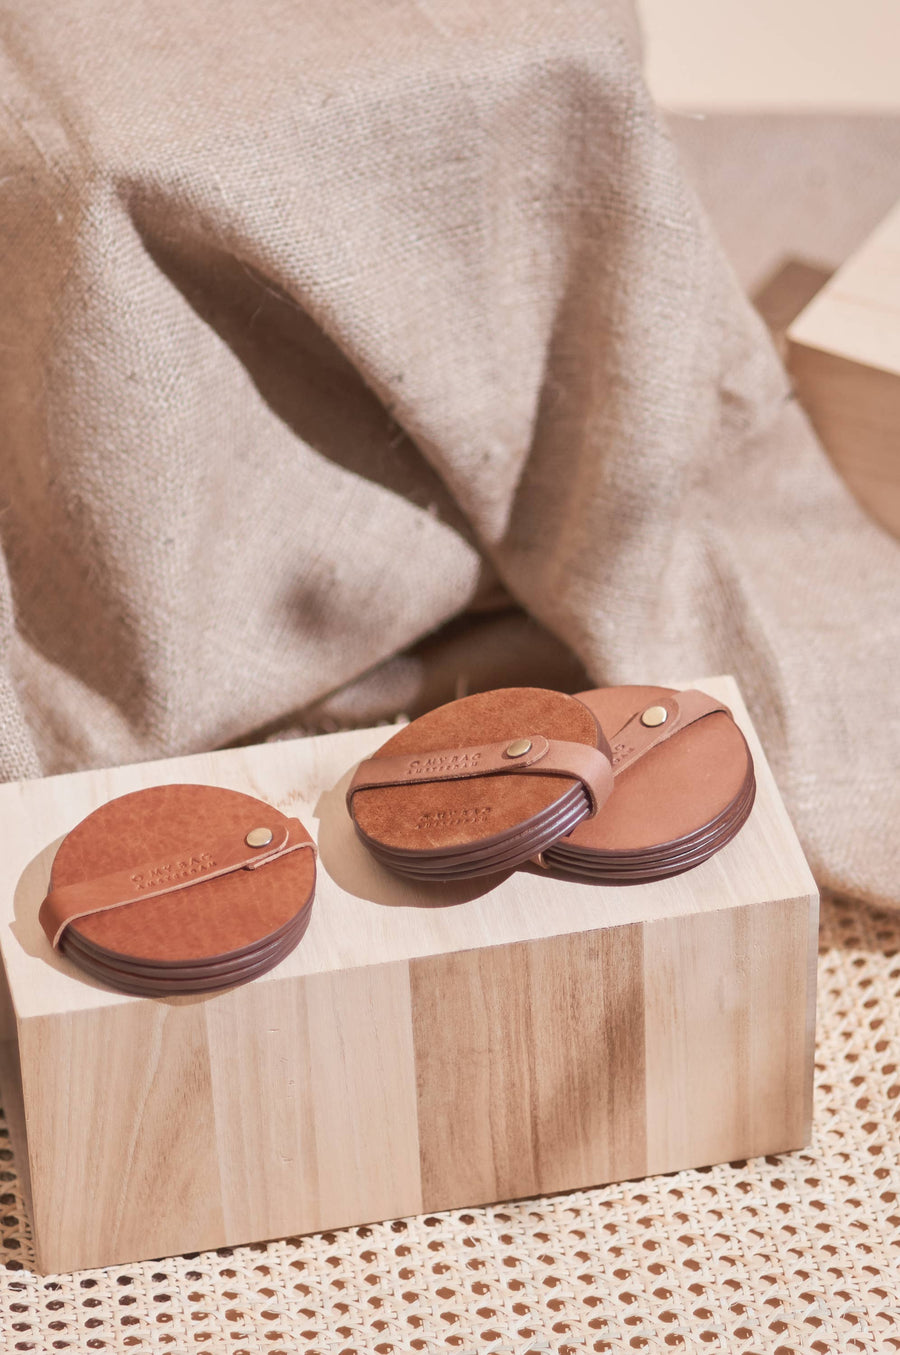 Leather Coasters (Set of 4)- Wild Oak Soft Grain Leather